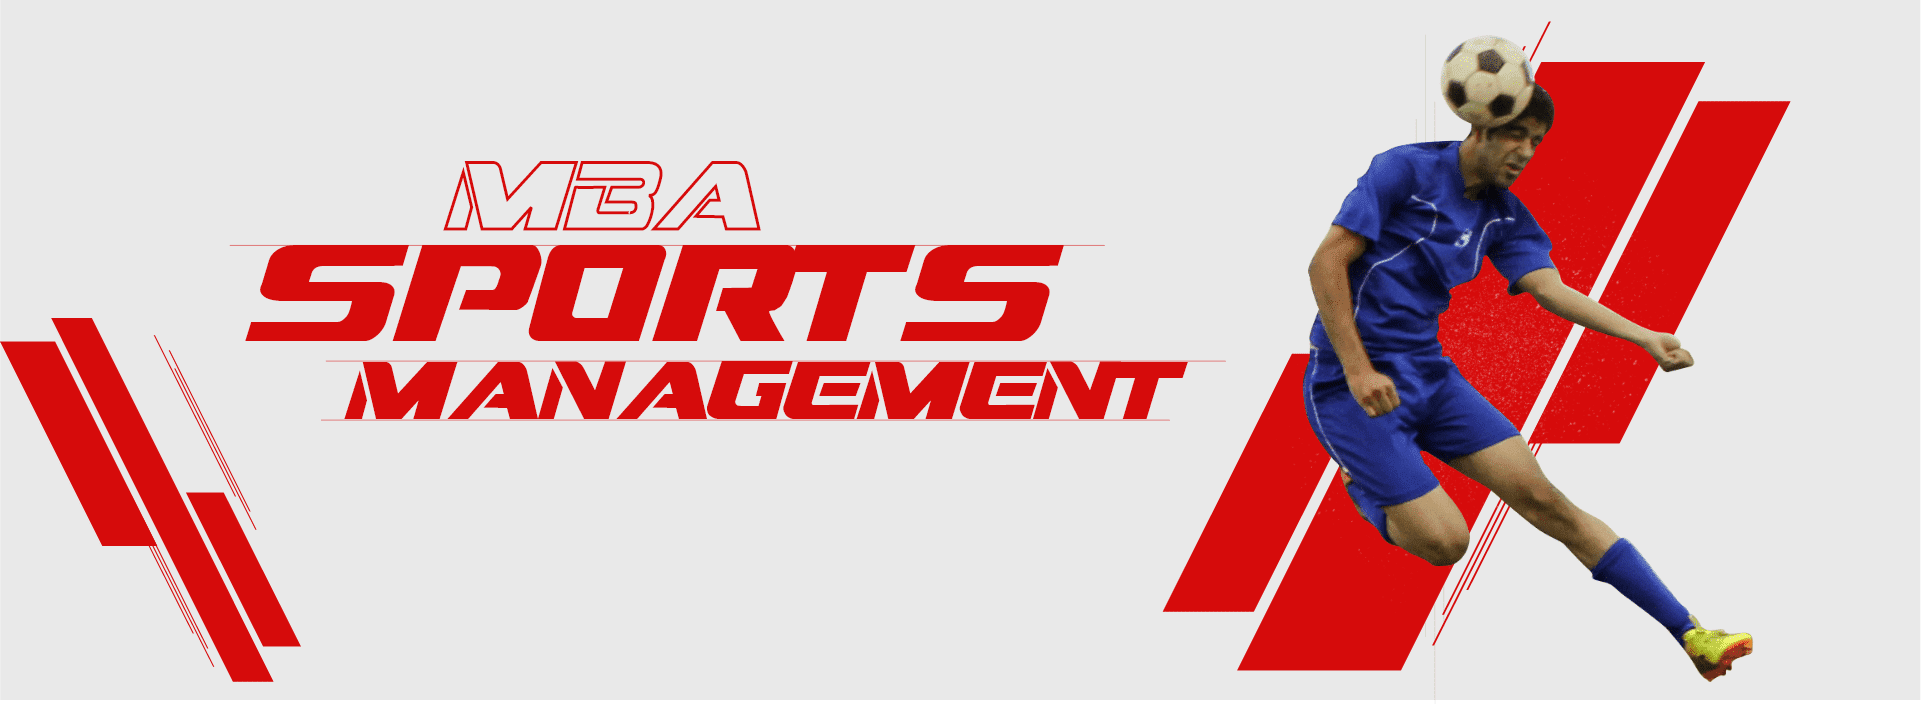 About SSSS | Symbiosis Sports Management | Sports Management Courses